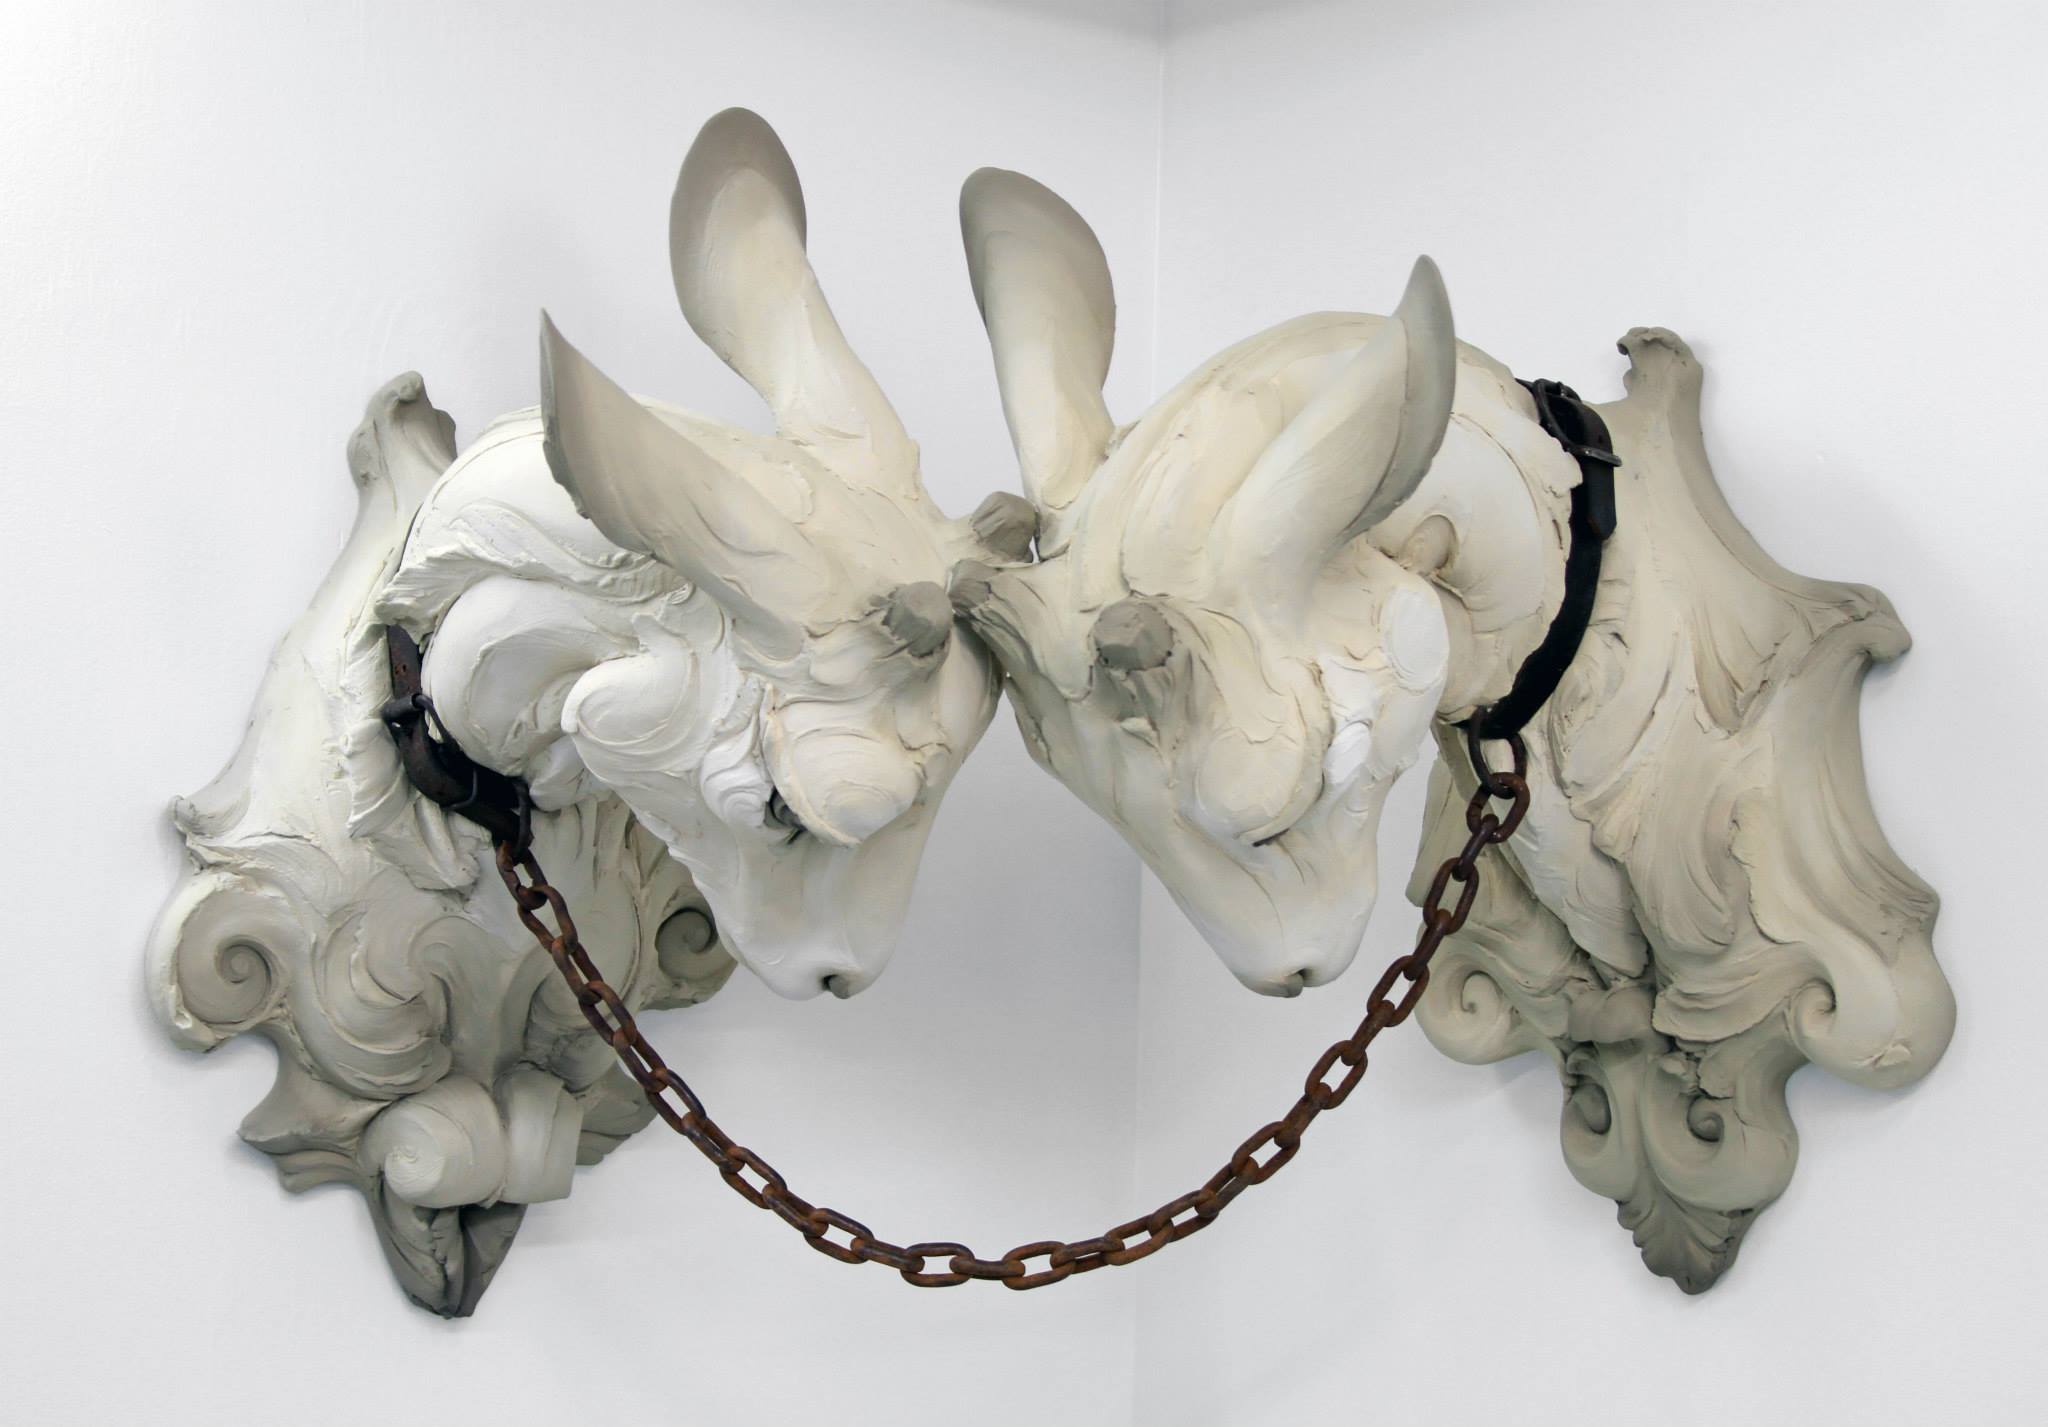 Beth Cavener – « Committed » sculptures